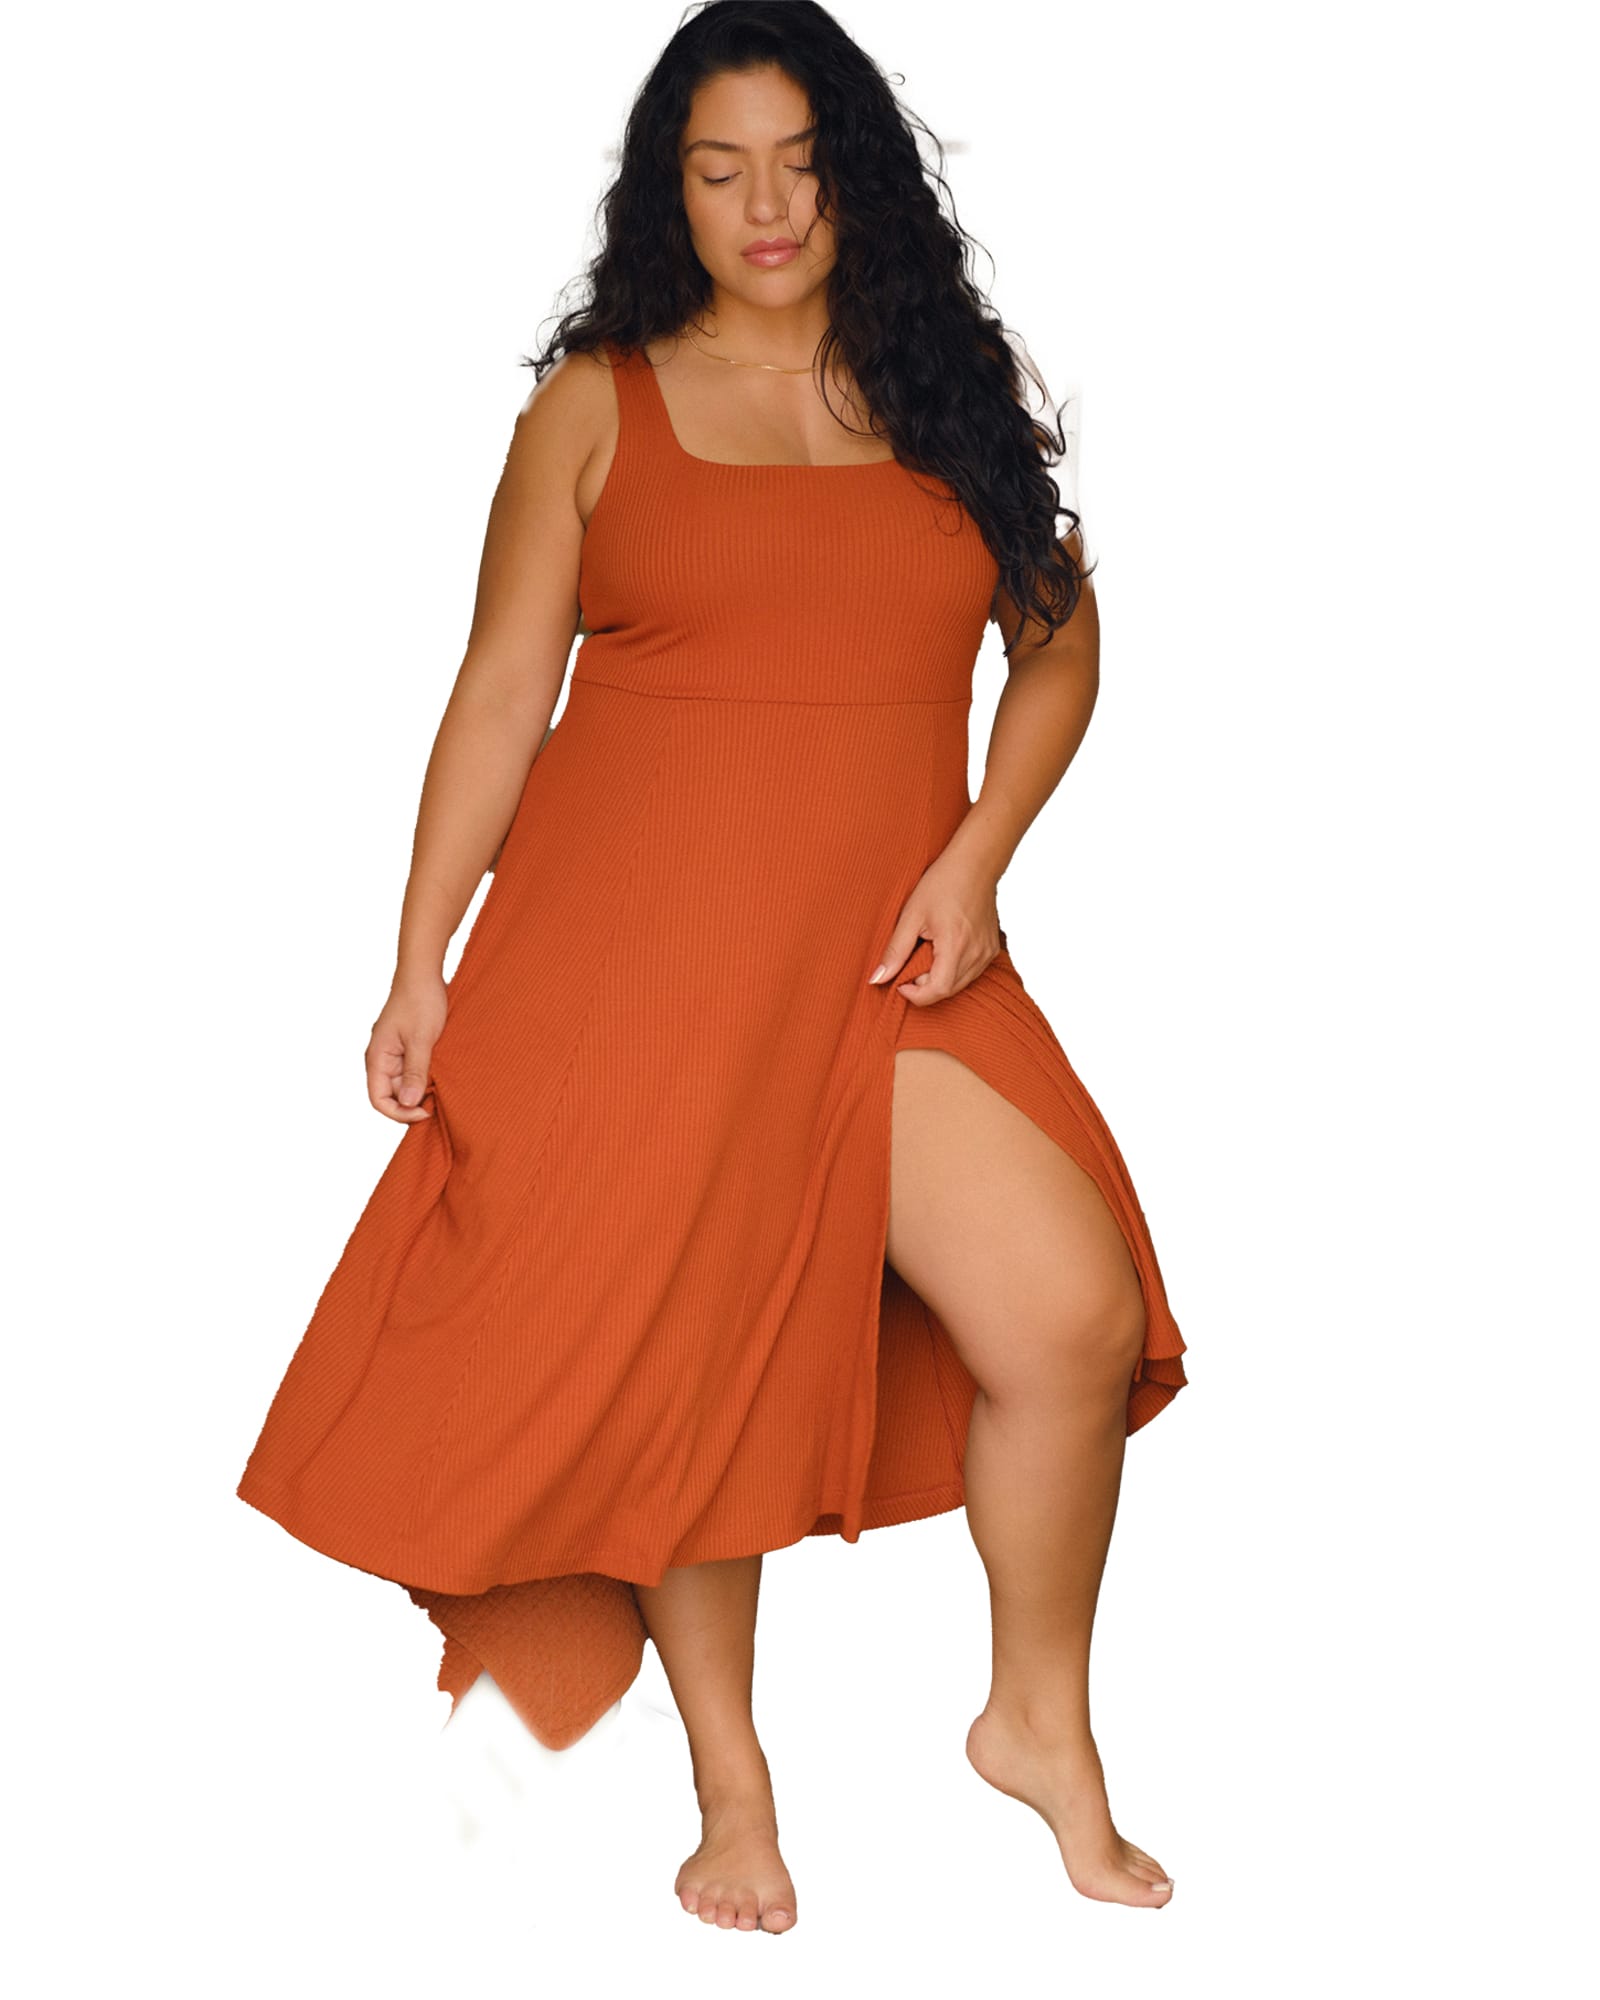 Rosi Dress in Cinnamon Tartan, Boho Plaid Maxi Dress